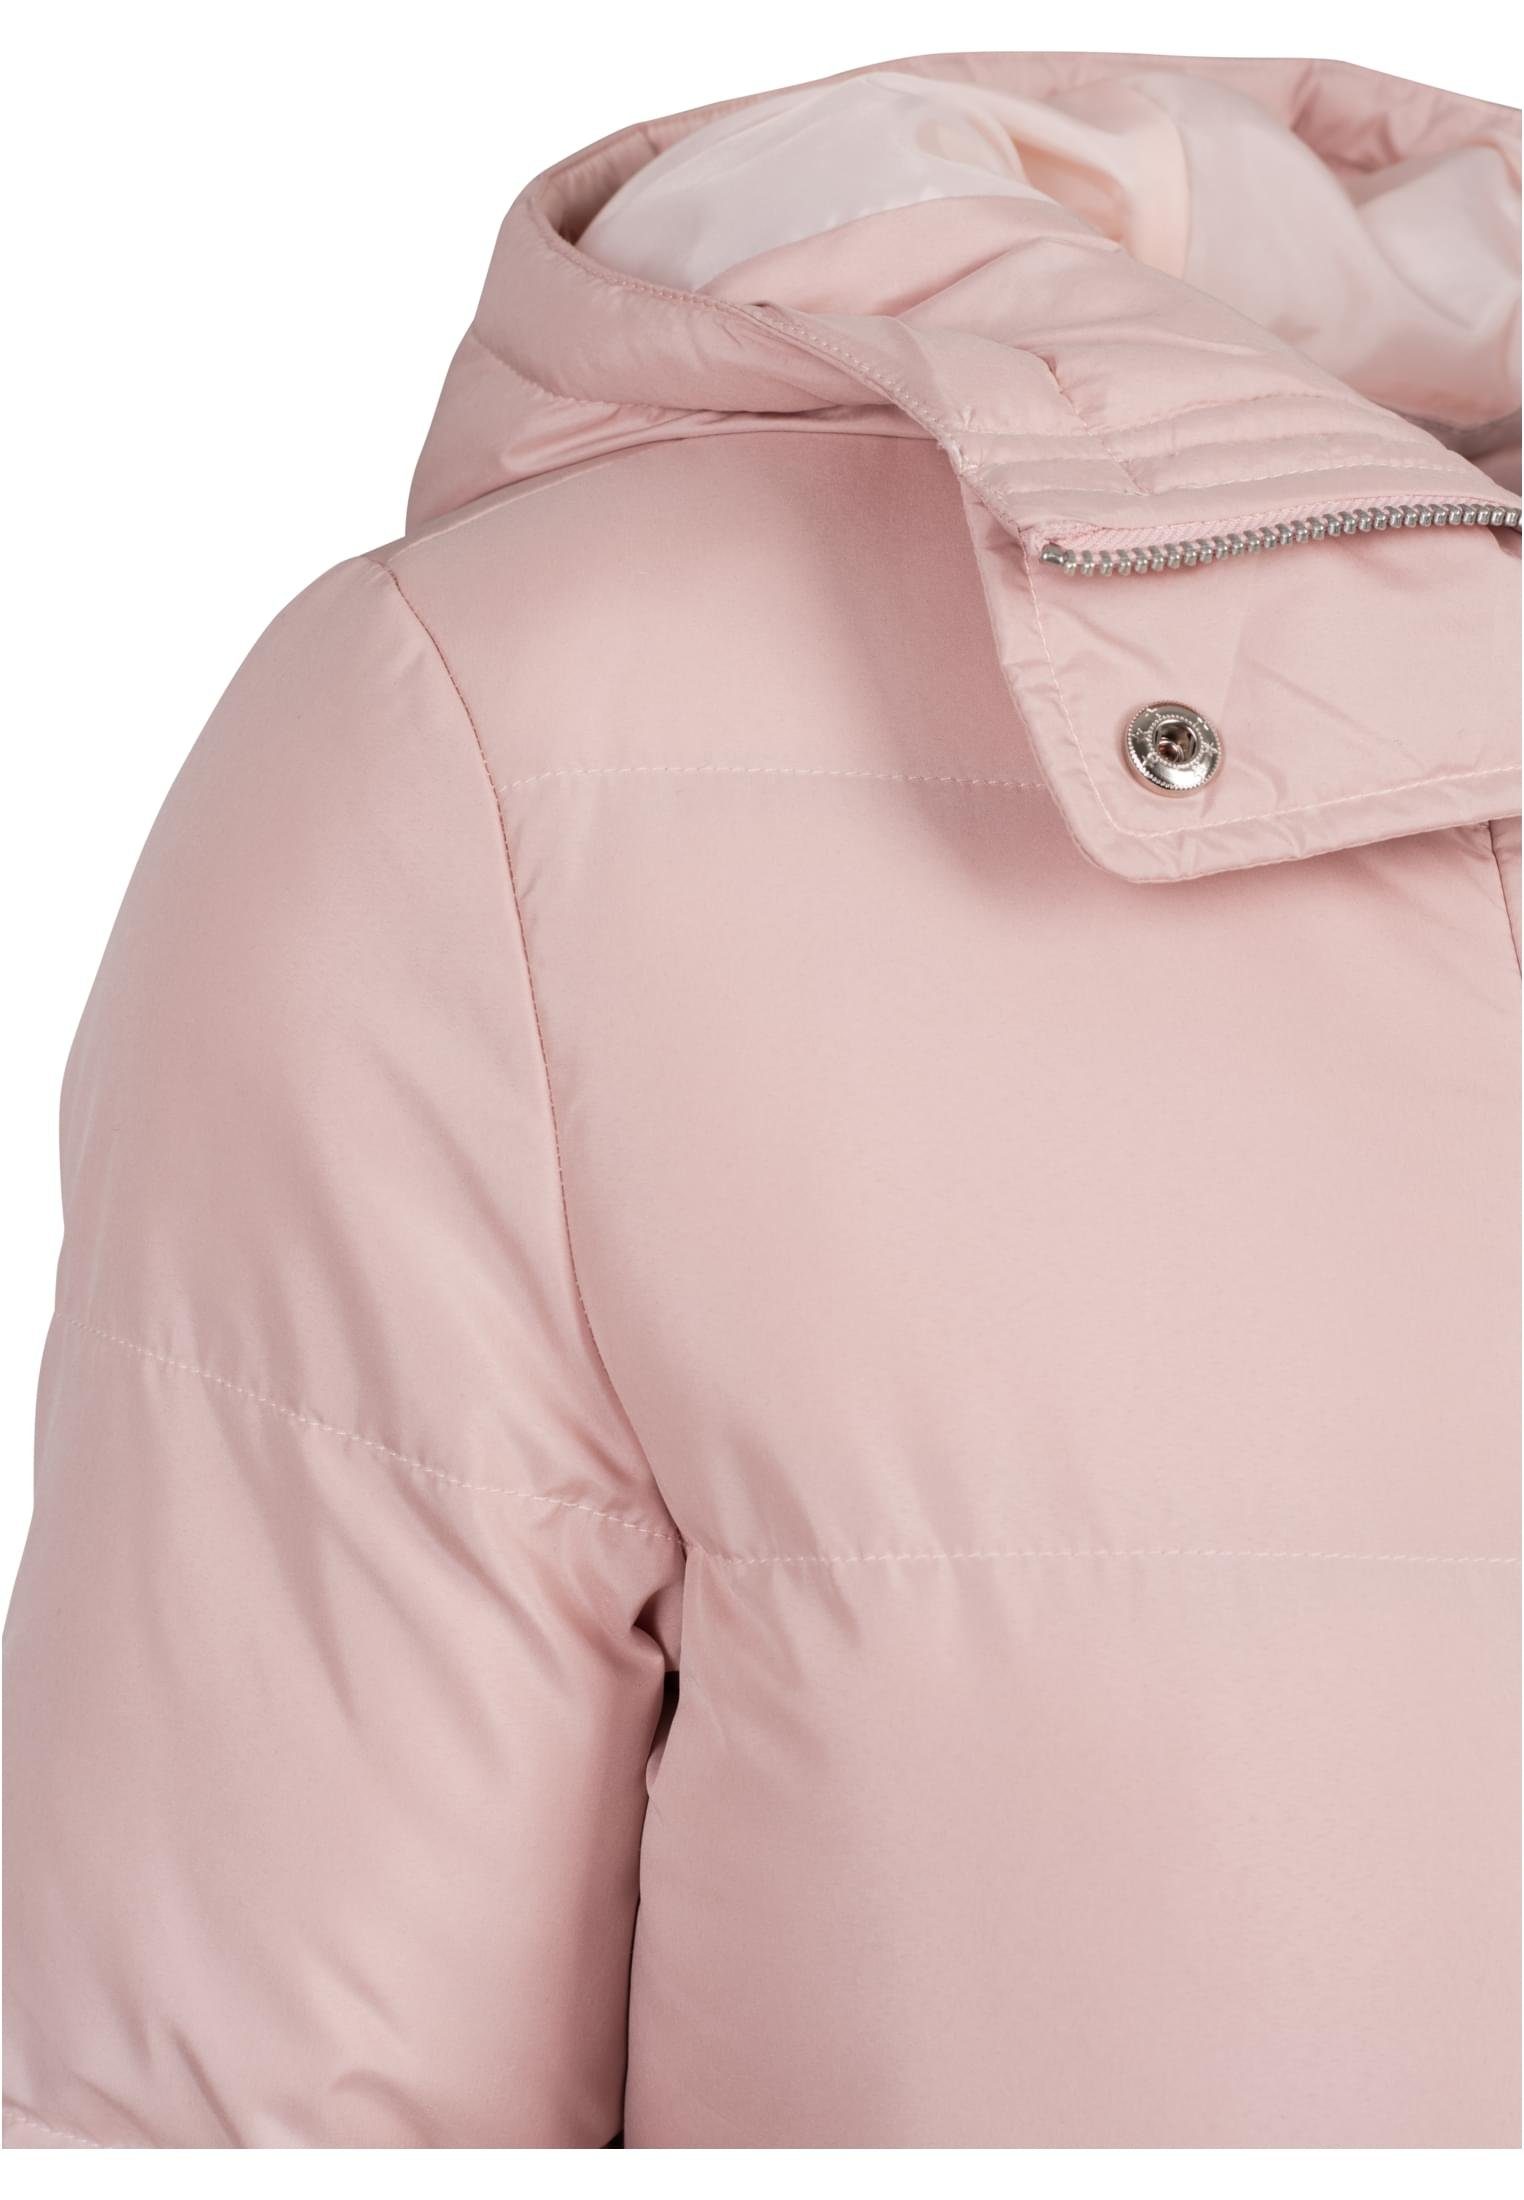 CLASSICS Damen Ladies Jacket lightrose Hooded Winterjacke (1-St) URBAN Puffer